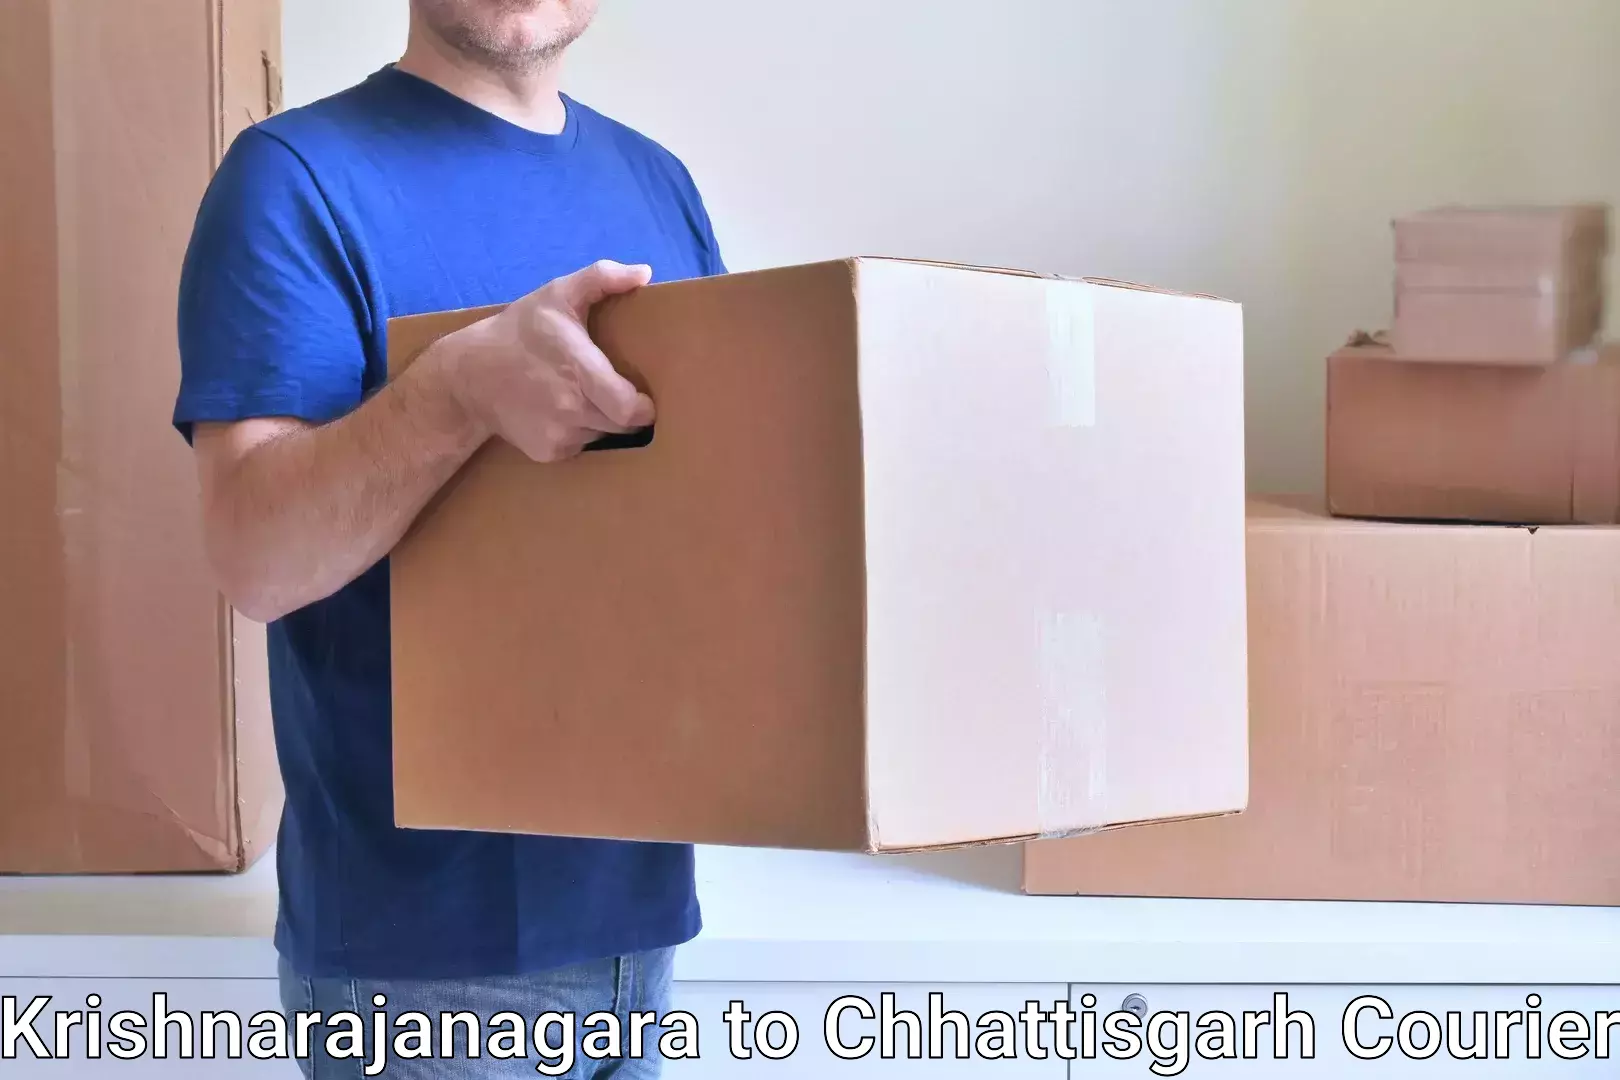 Global courier networks Krishnarajanagara to Chhattisgarh